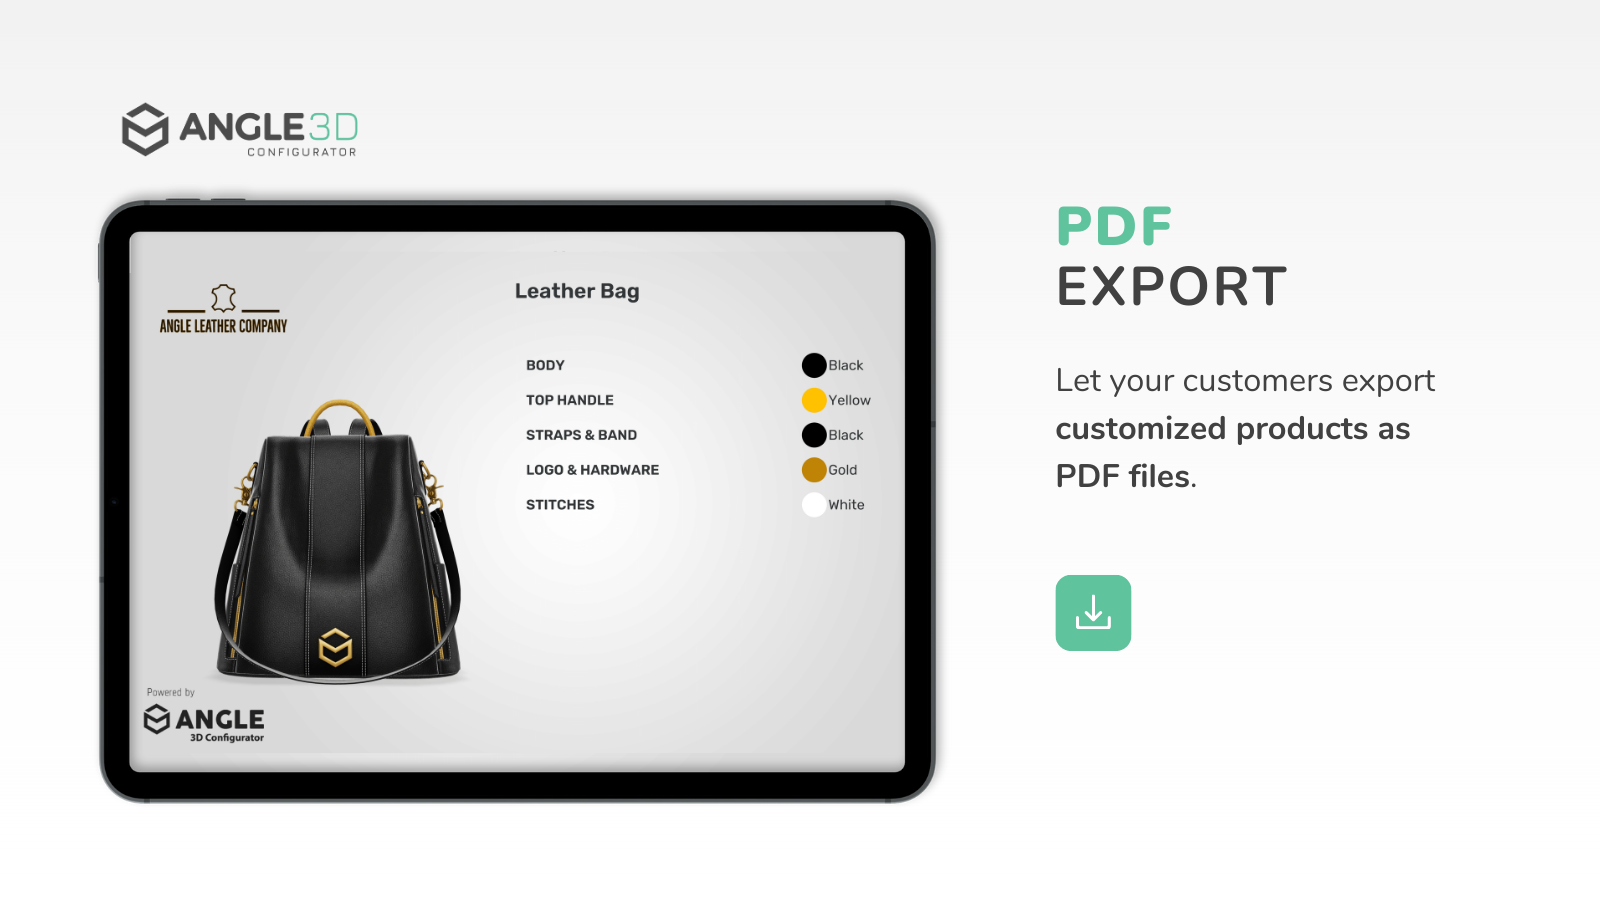 PDF Export feature